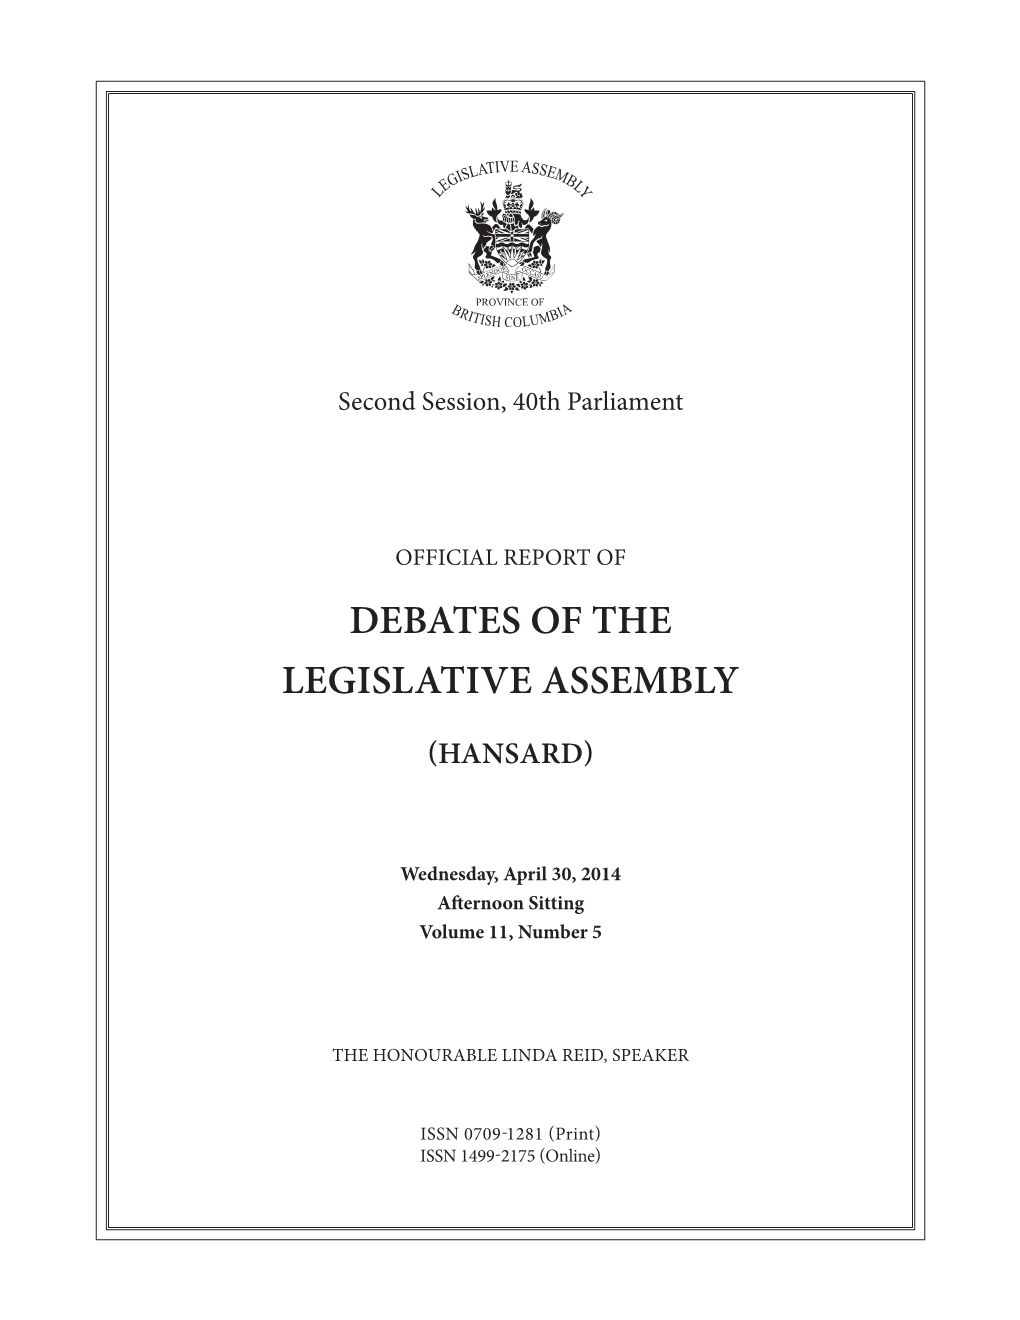 Debates of the Legislative Assembly